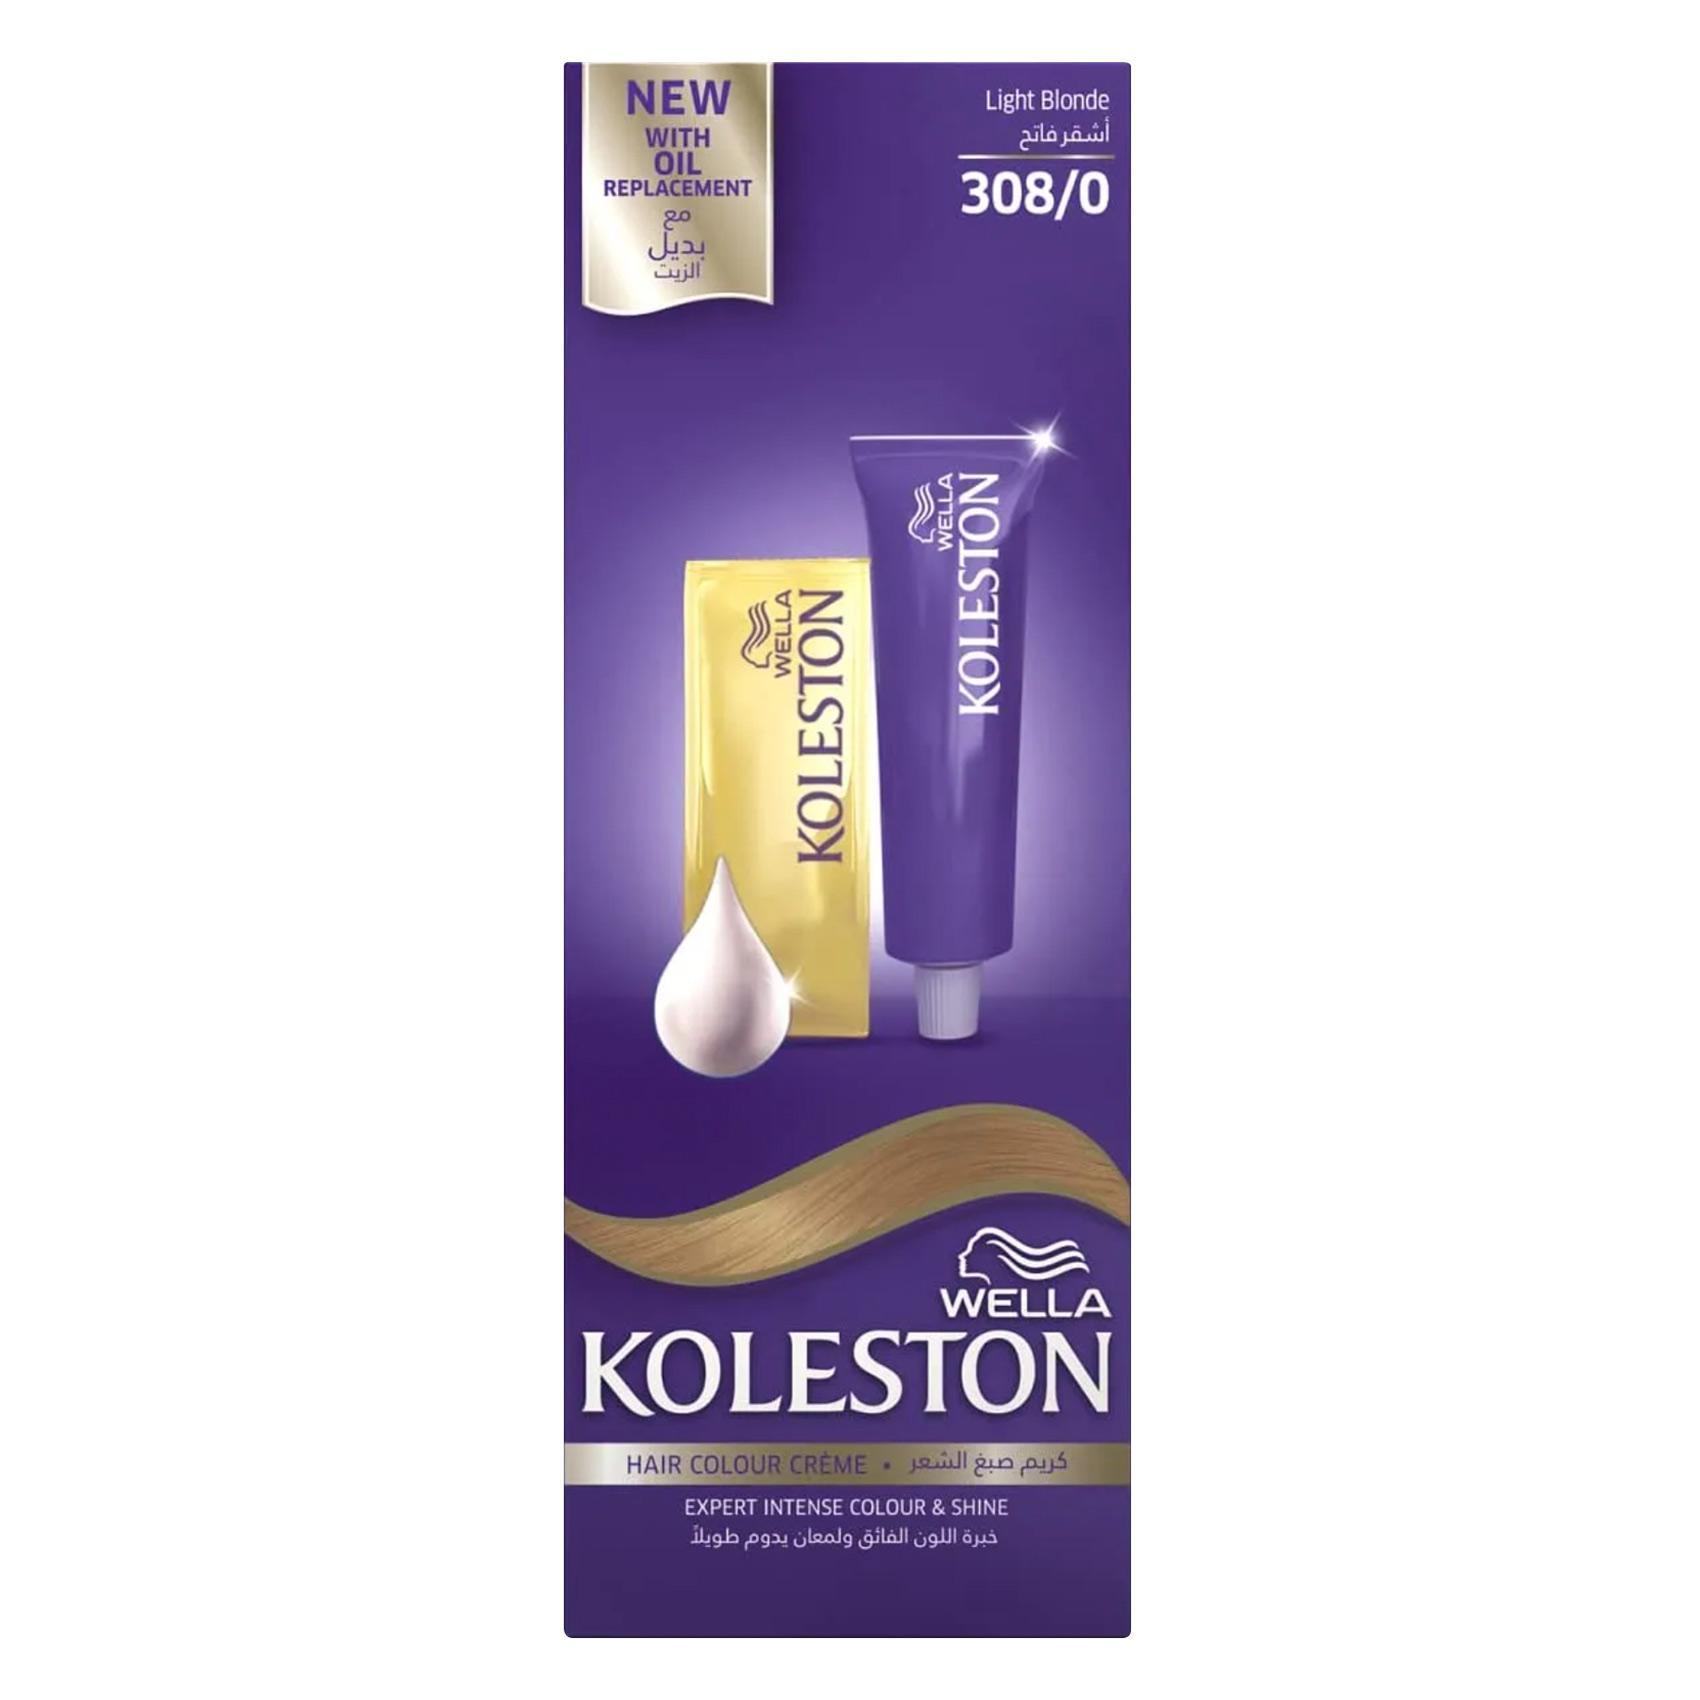 Wella Koleston Expert Intense Colour And Shine Hair Colour Creme 60ML 308/0 Light Blonde